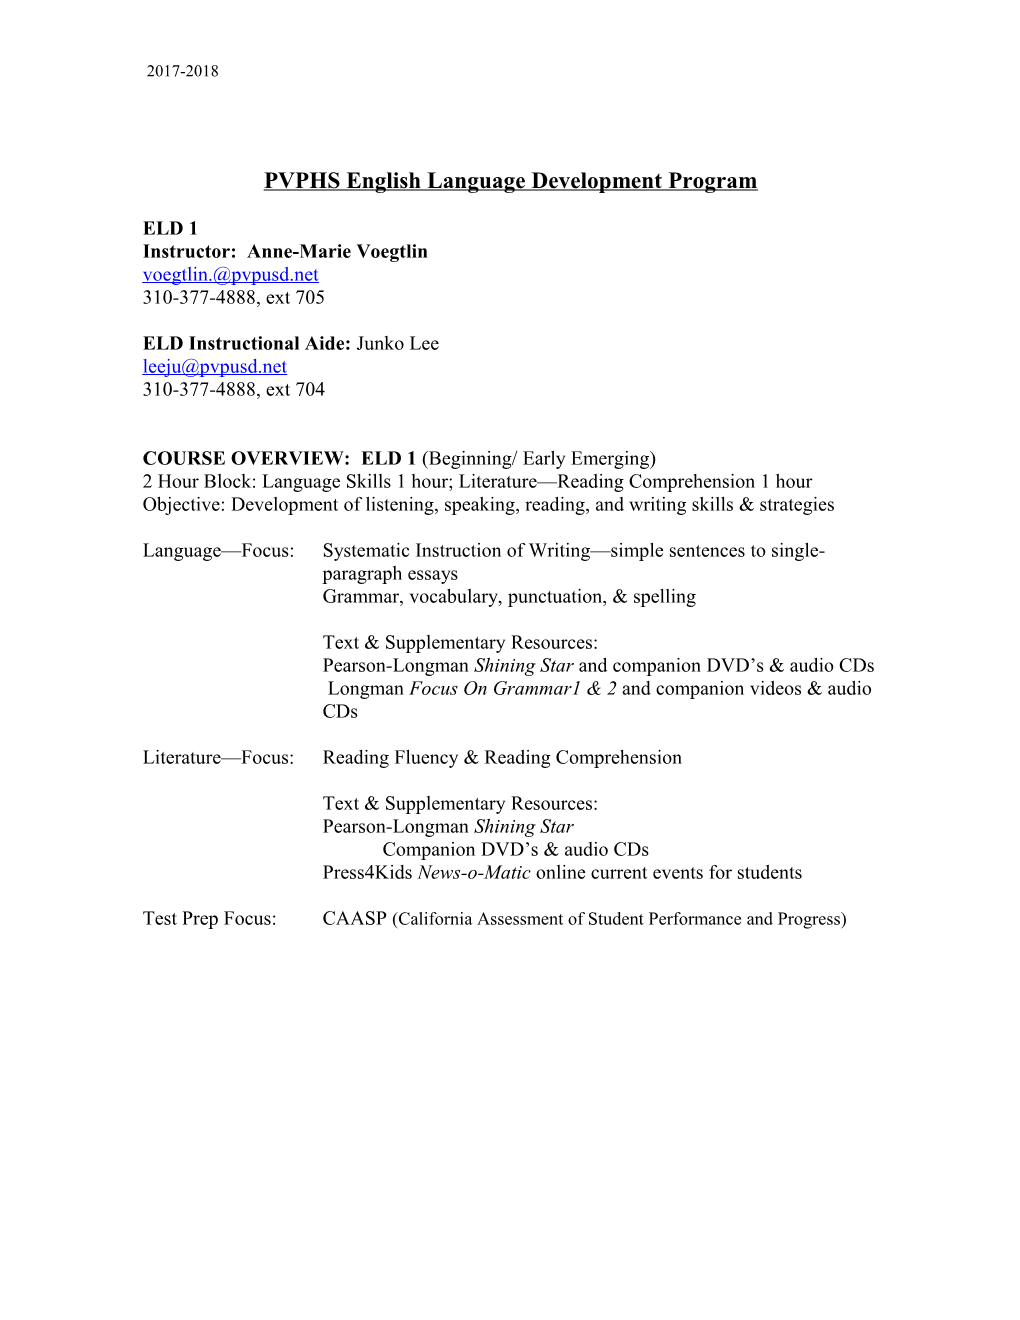 PVPHS English Language Development Program